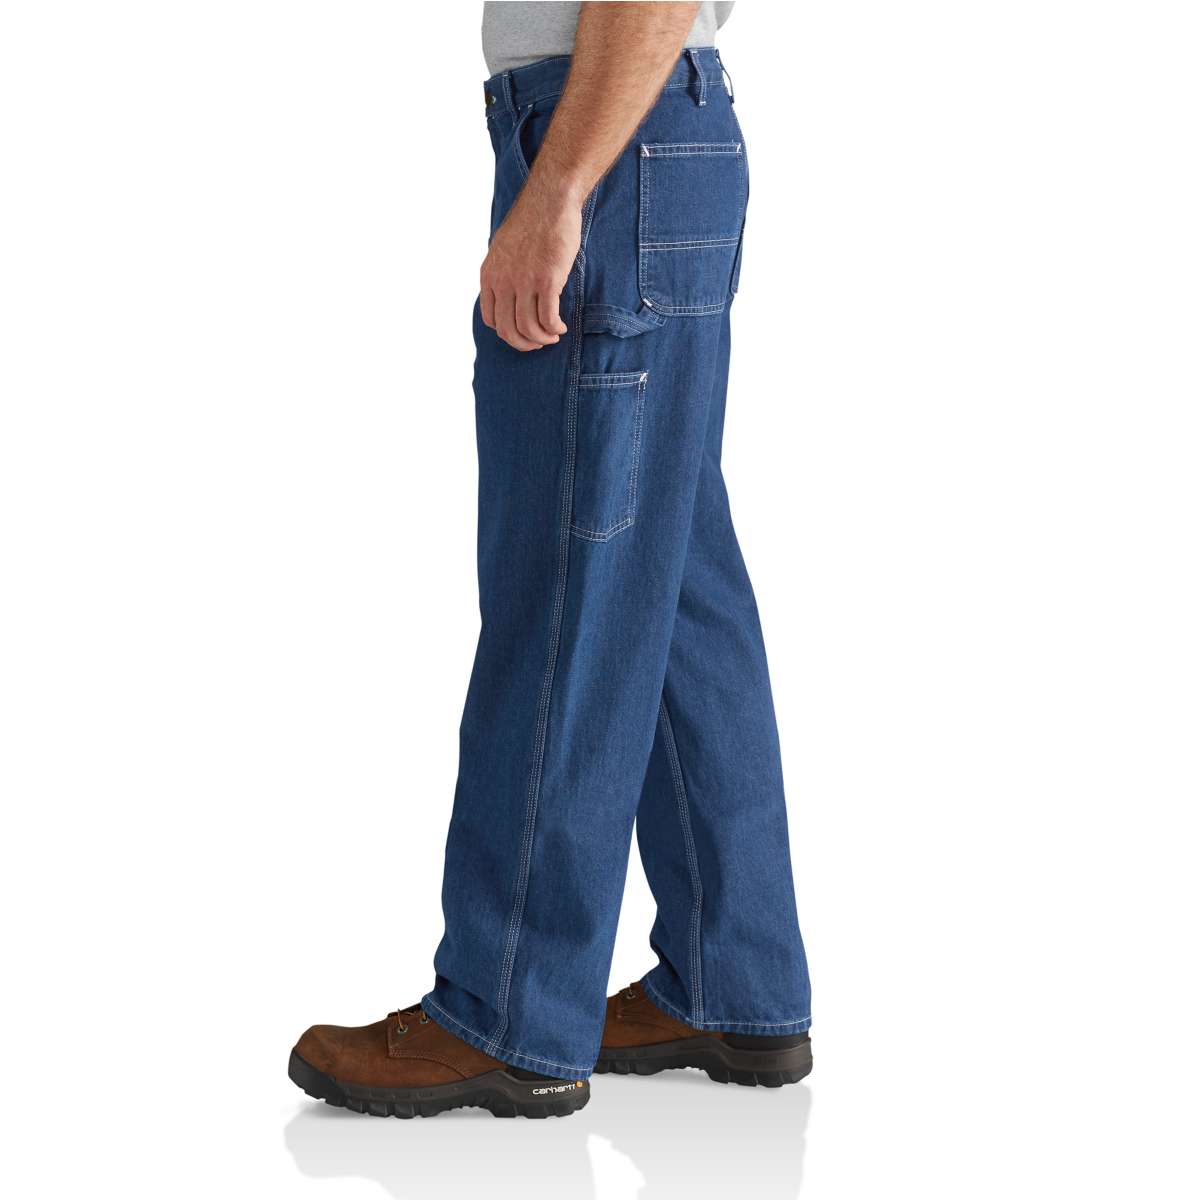 B13- Carhartt Men's Loose Fit Utility Jean